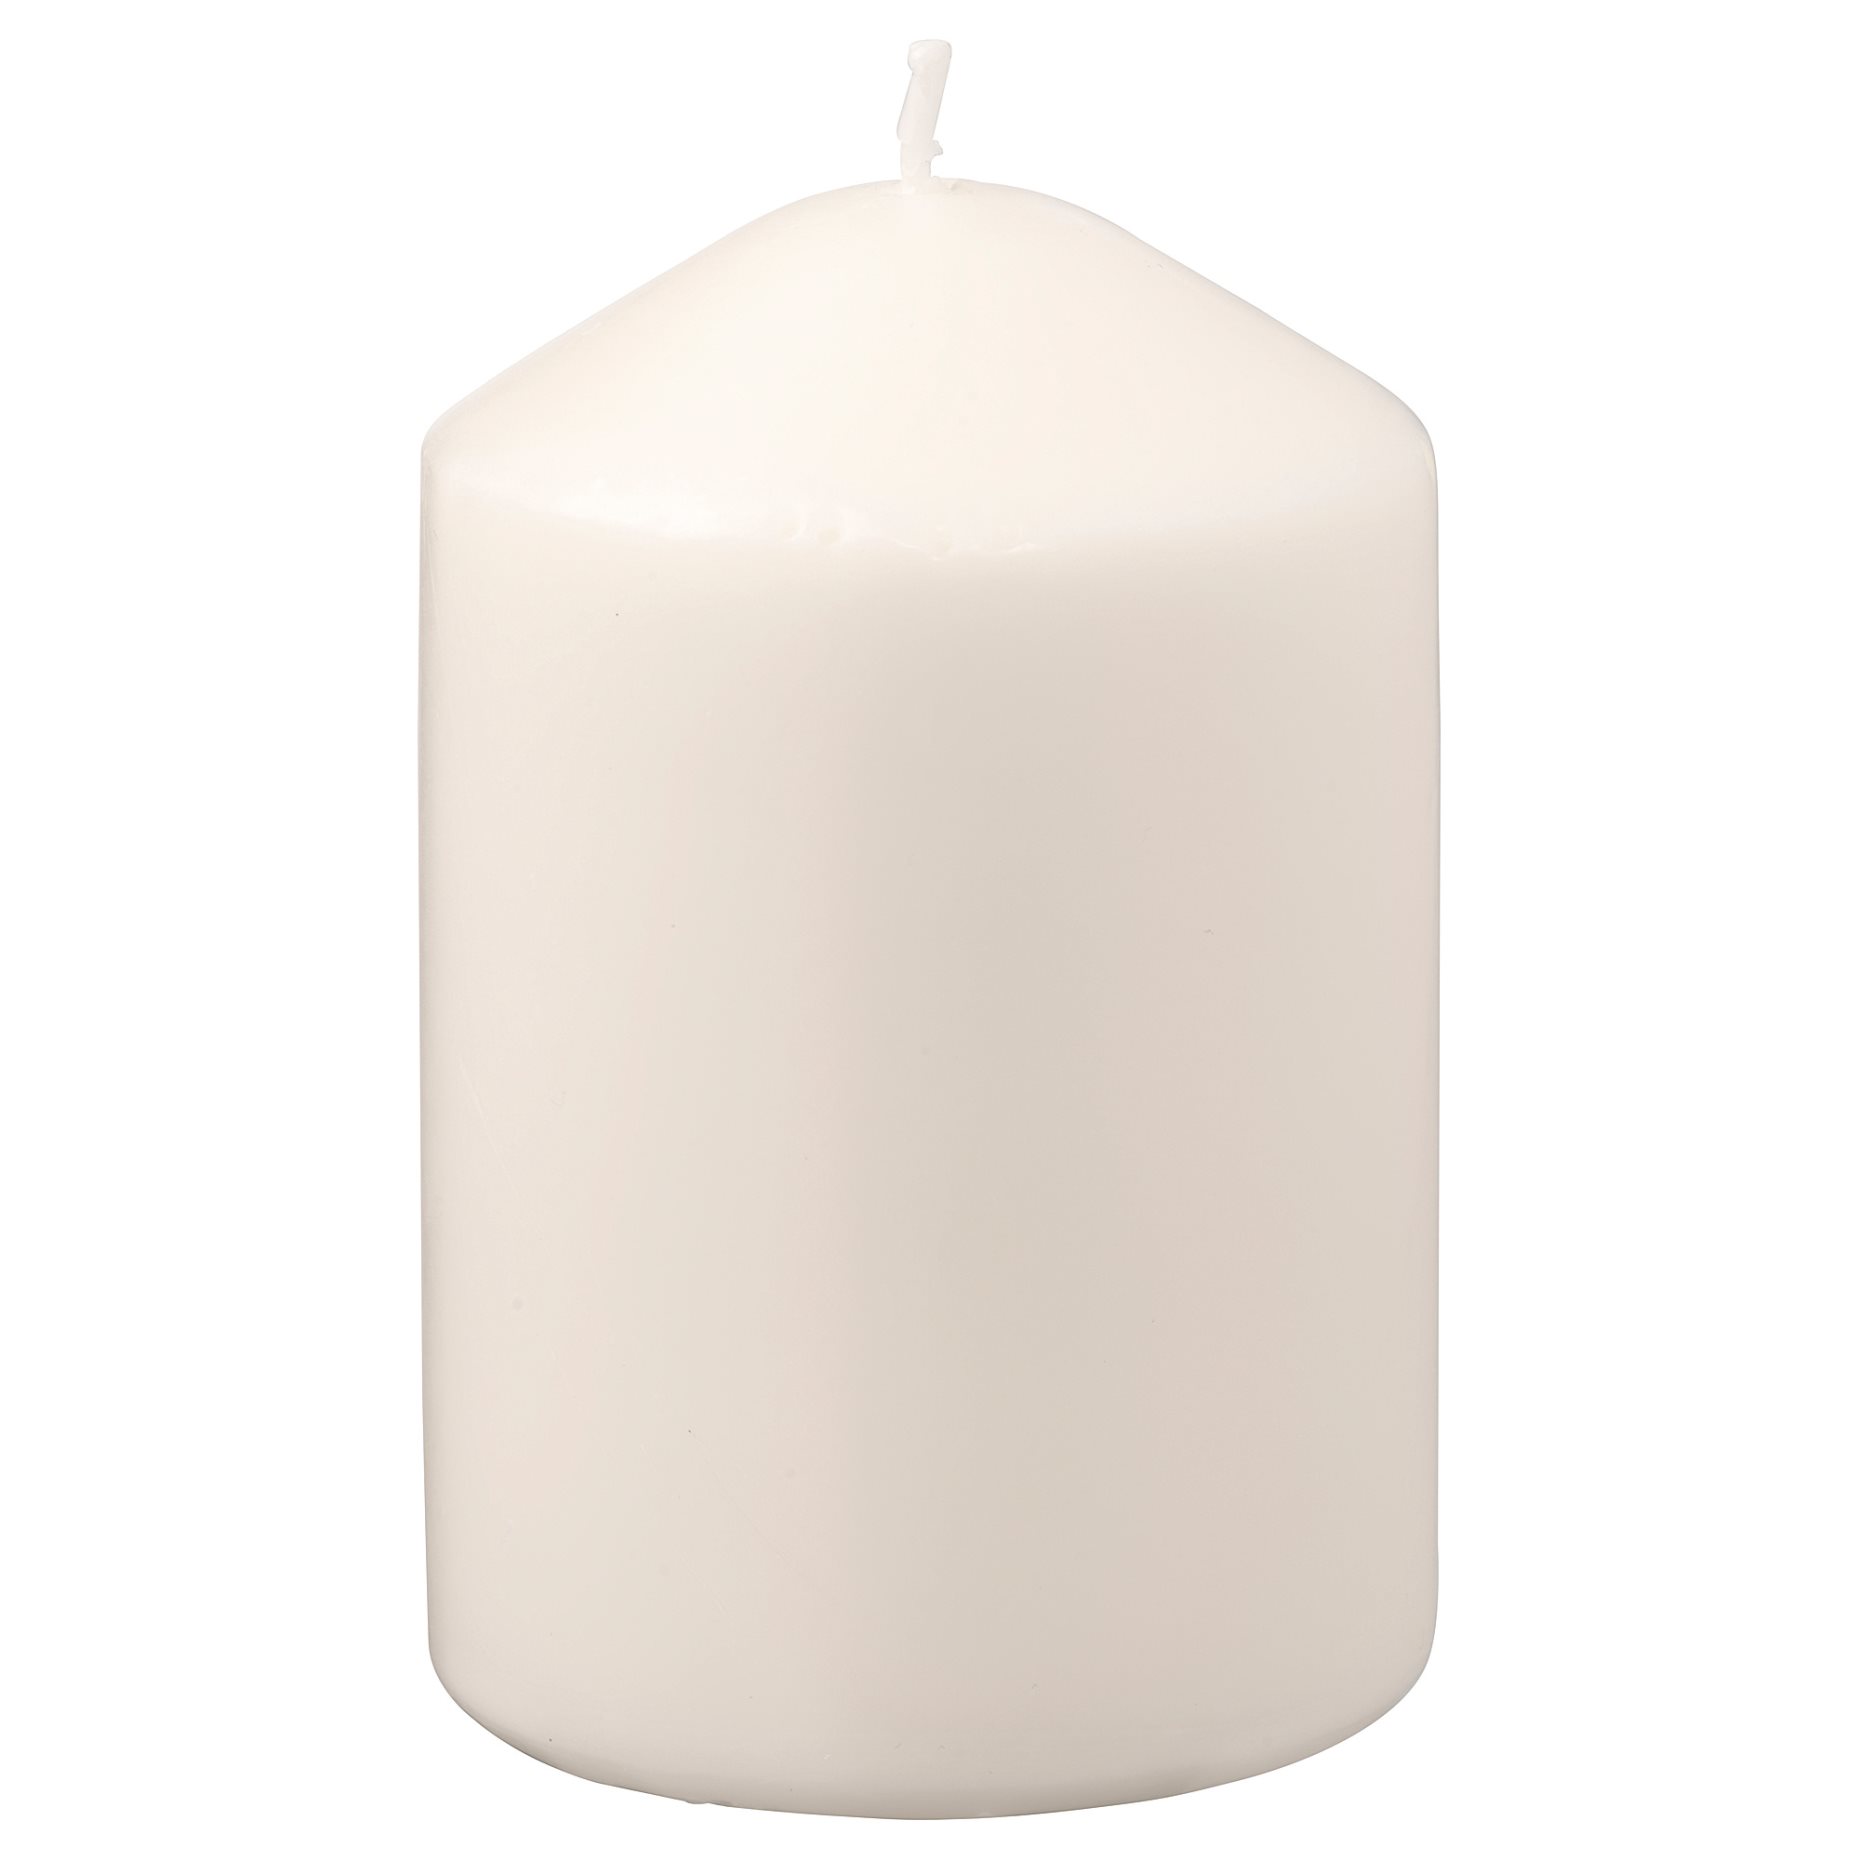 LATTNAD, unscented block candle, 703.384.56